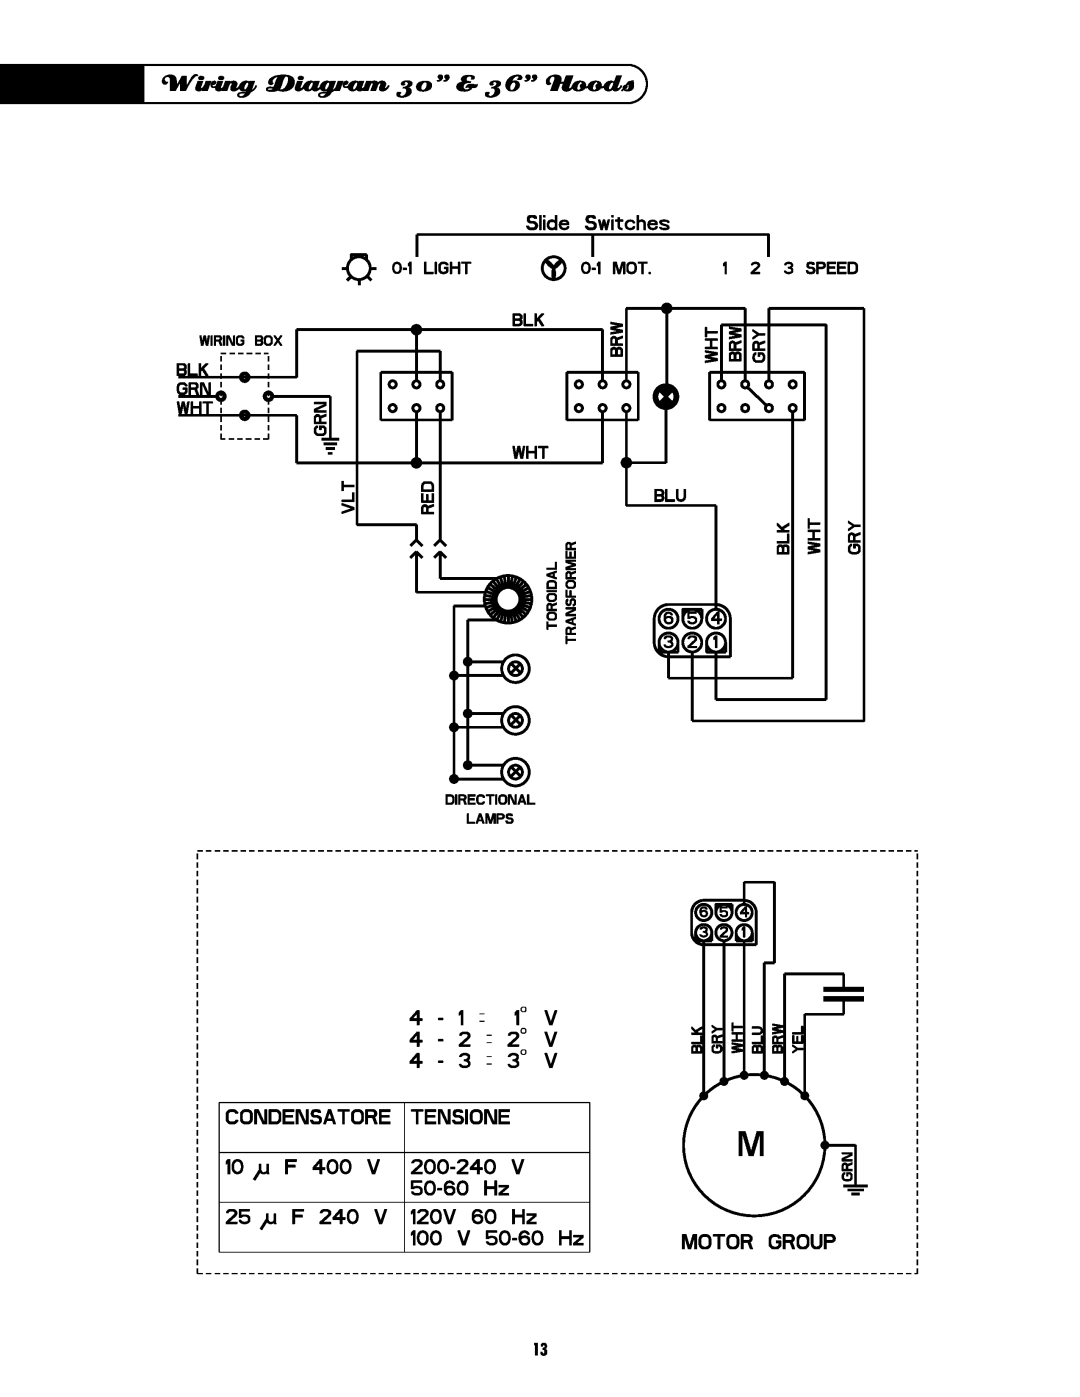 DCS EH-30SS, EH-36SS manual Wiring Diagram 30” & 36” Hoods 